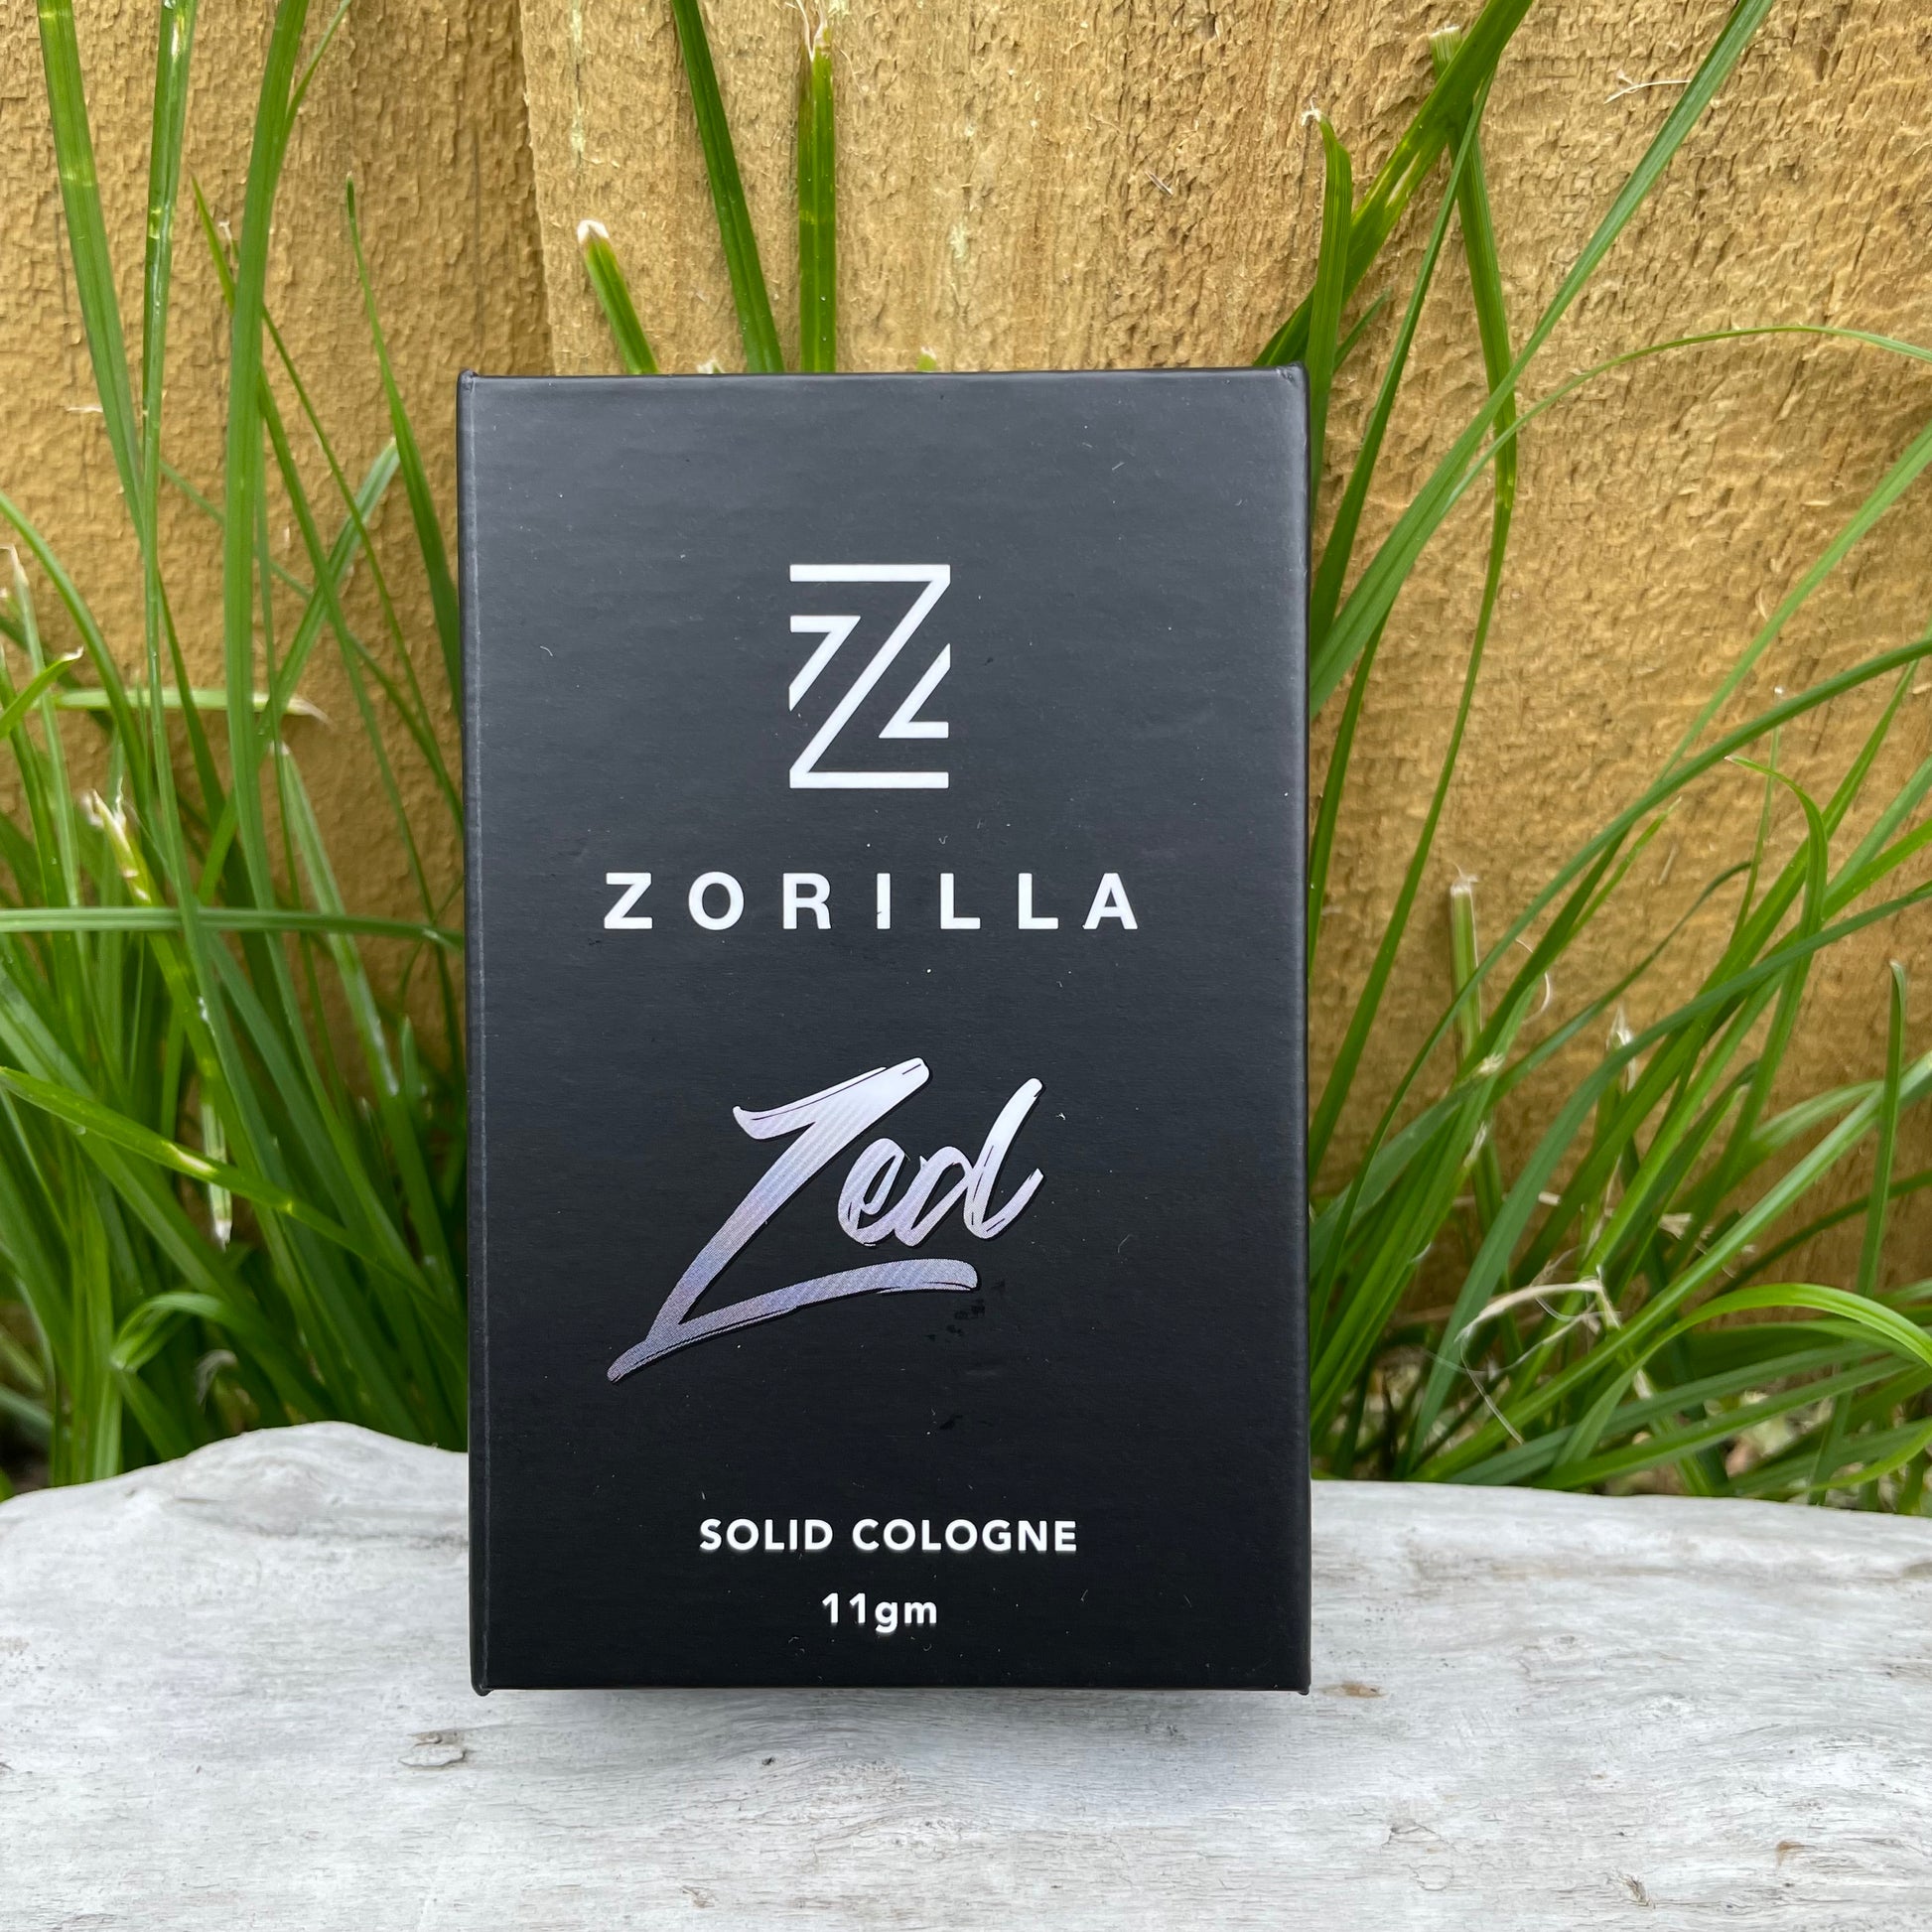 Zorilla men's solid cologne. Fragrance - Zed